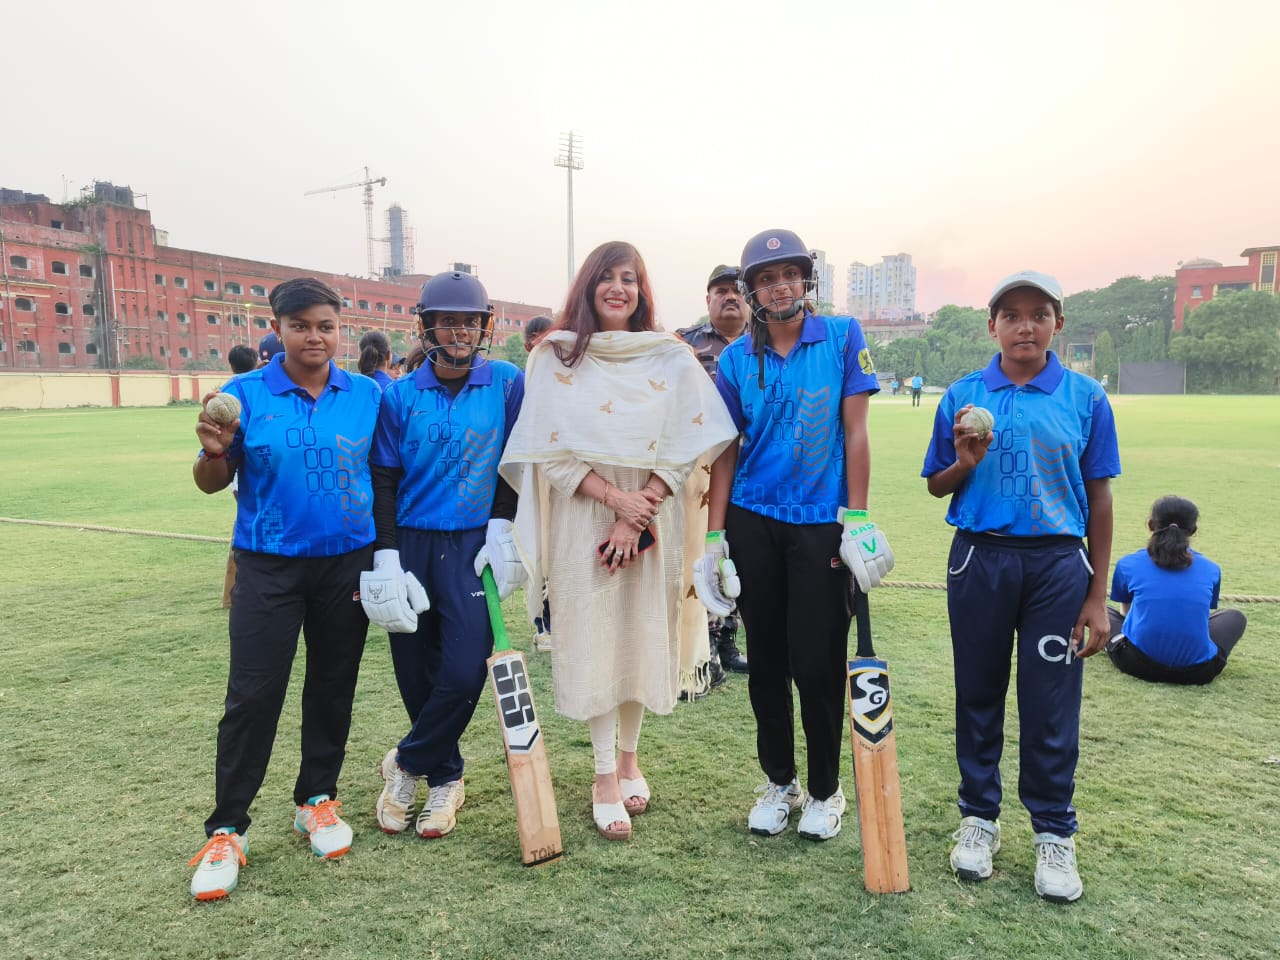 NCC Cricket: আইপিএলের মাঝেই মহিলাদের জমজমাট টি-টোয়েন্টি, চ্যাম্পিয়ন মা সারদা দল